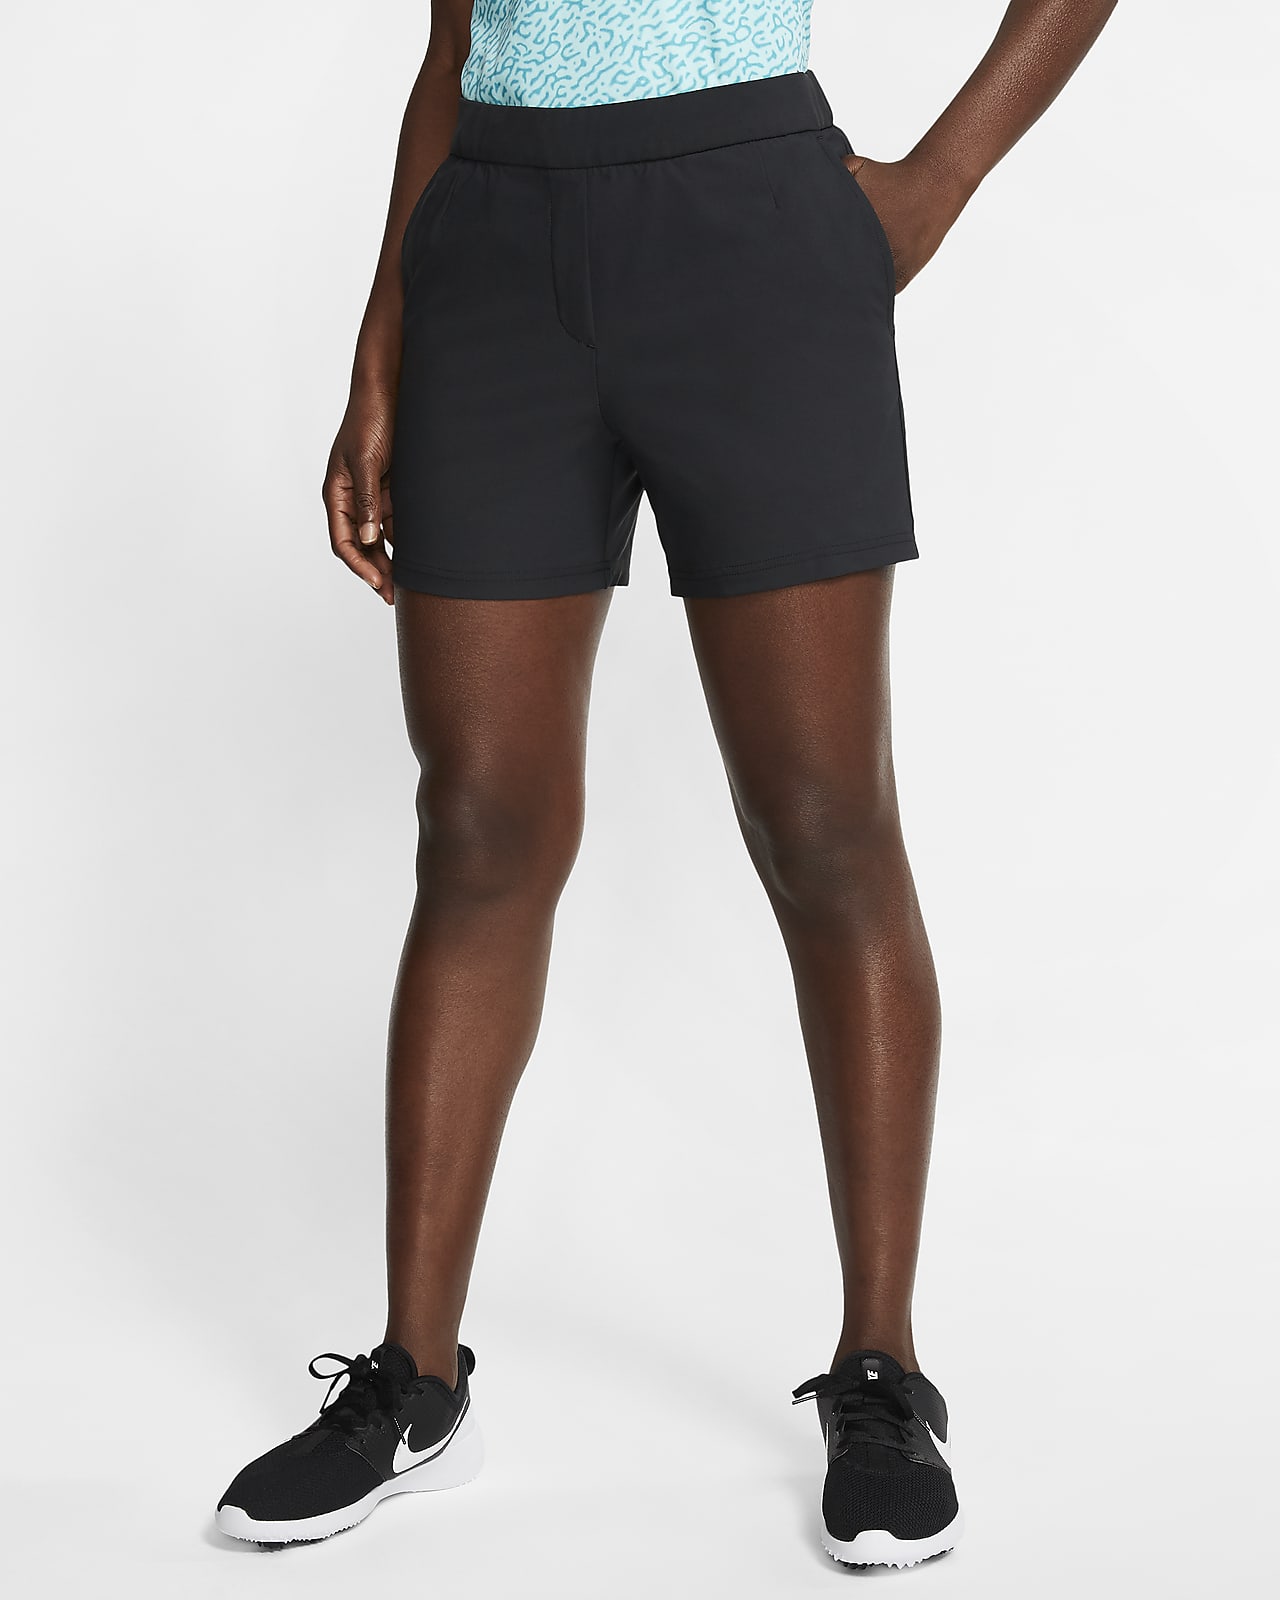 nike golf shorts women's plus size